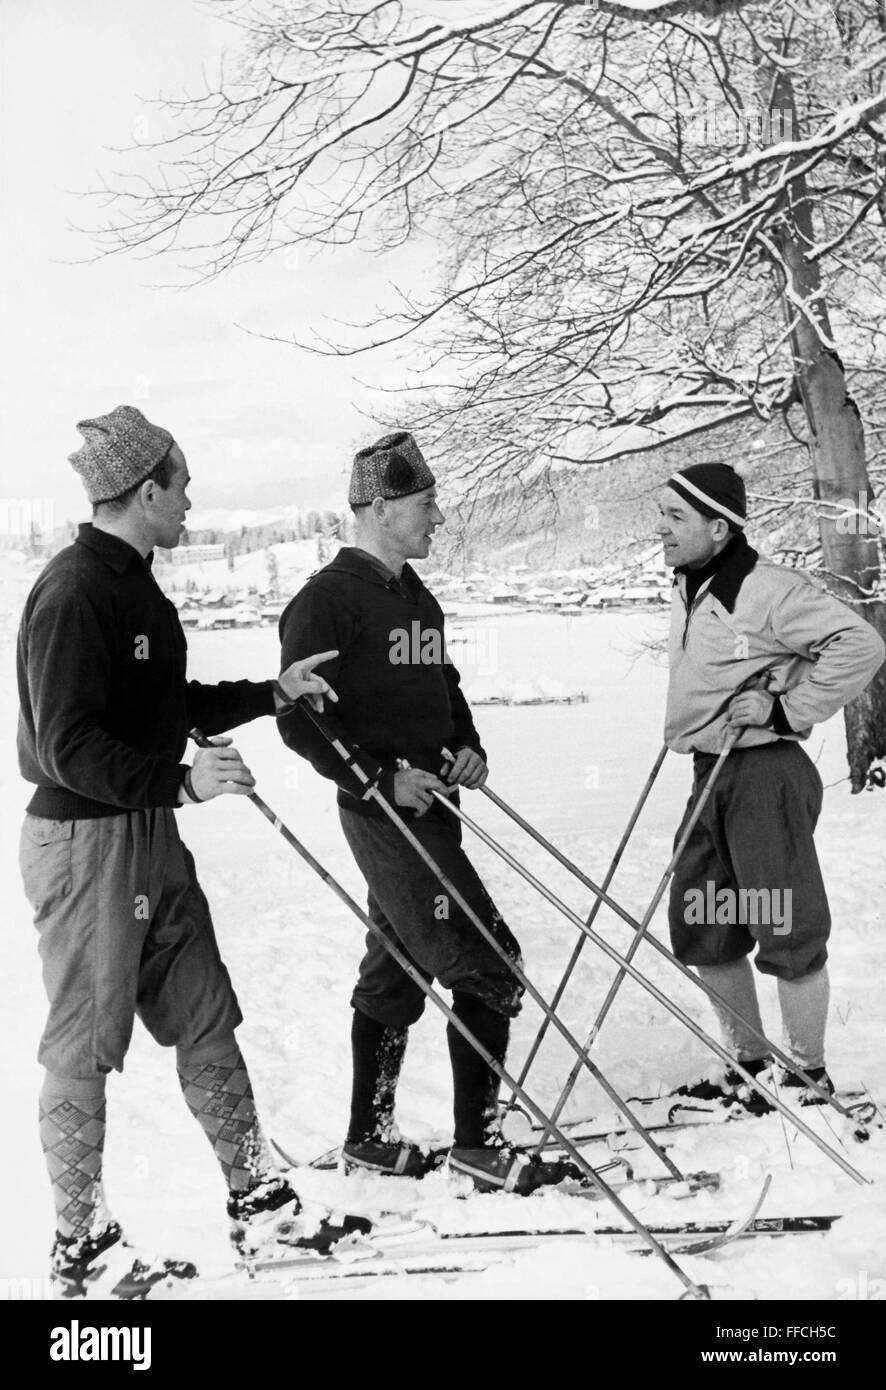 SOVIET OLYMPIC TEAM, 1960. /nMembers of the 1960 USSR Olympic skiing team. From left: Nikolay Anikin, Vladimir Kuzin, and Alexei Kuznetsov. Stock Photo